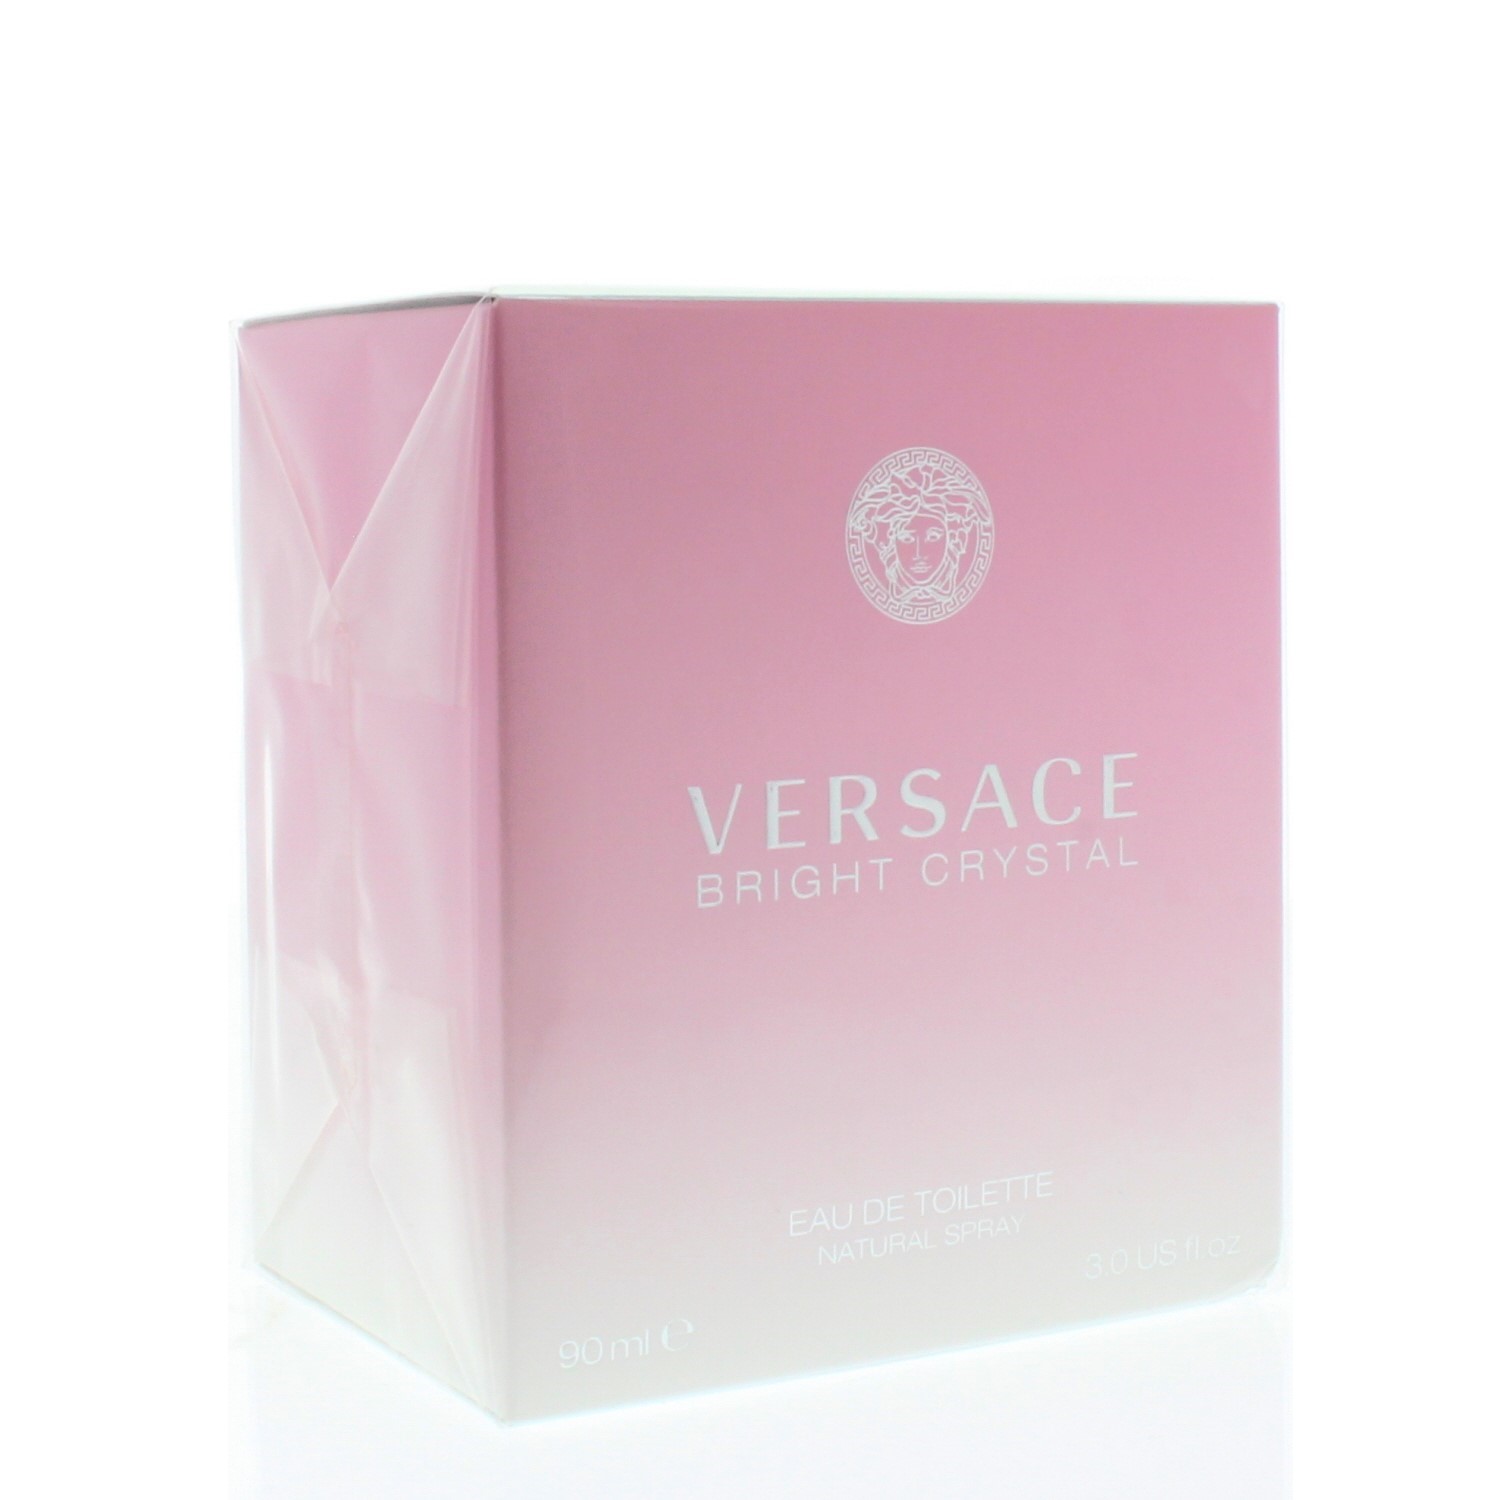 Versace Bright Crystal Eau De Toilette Spray, Perfume for Women, 3 oz - image 1 of 3